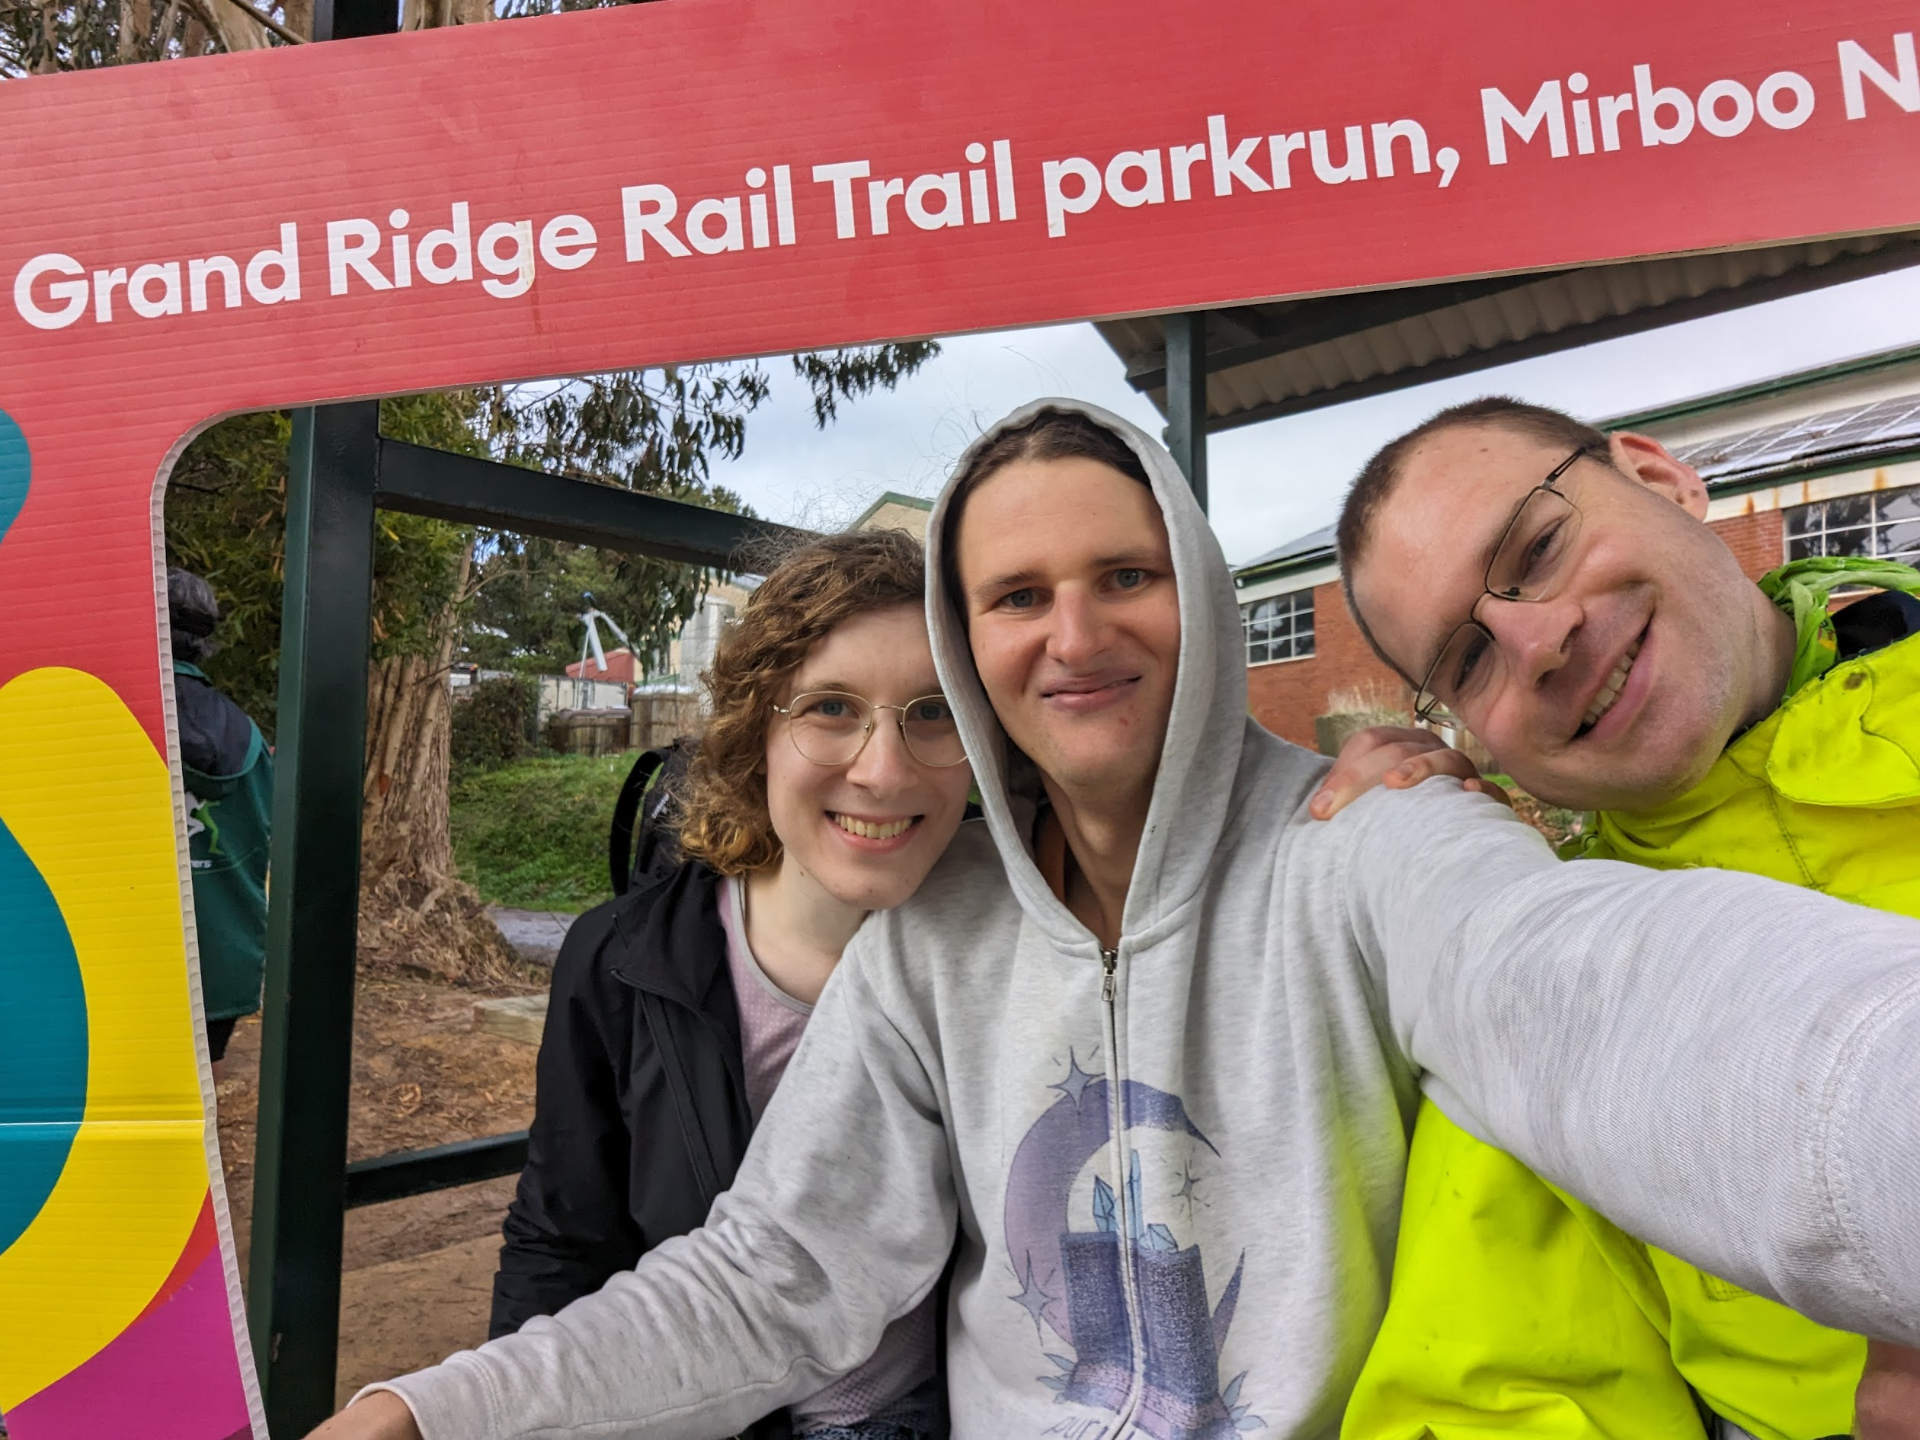 Selfie with Luke and Alex while holding up the Grand Ridge Rail Trail parkrun selfie border cardboard